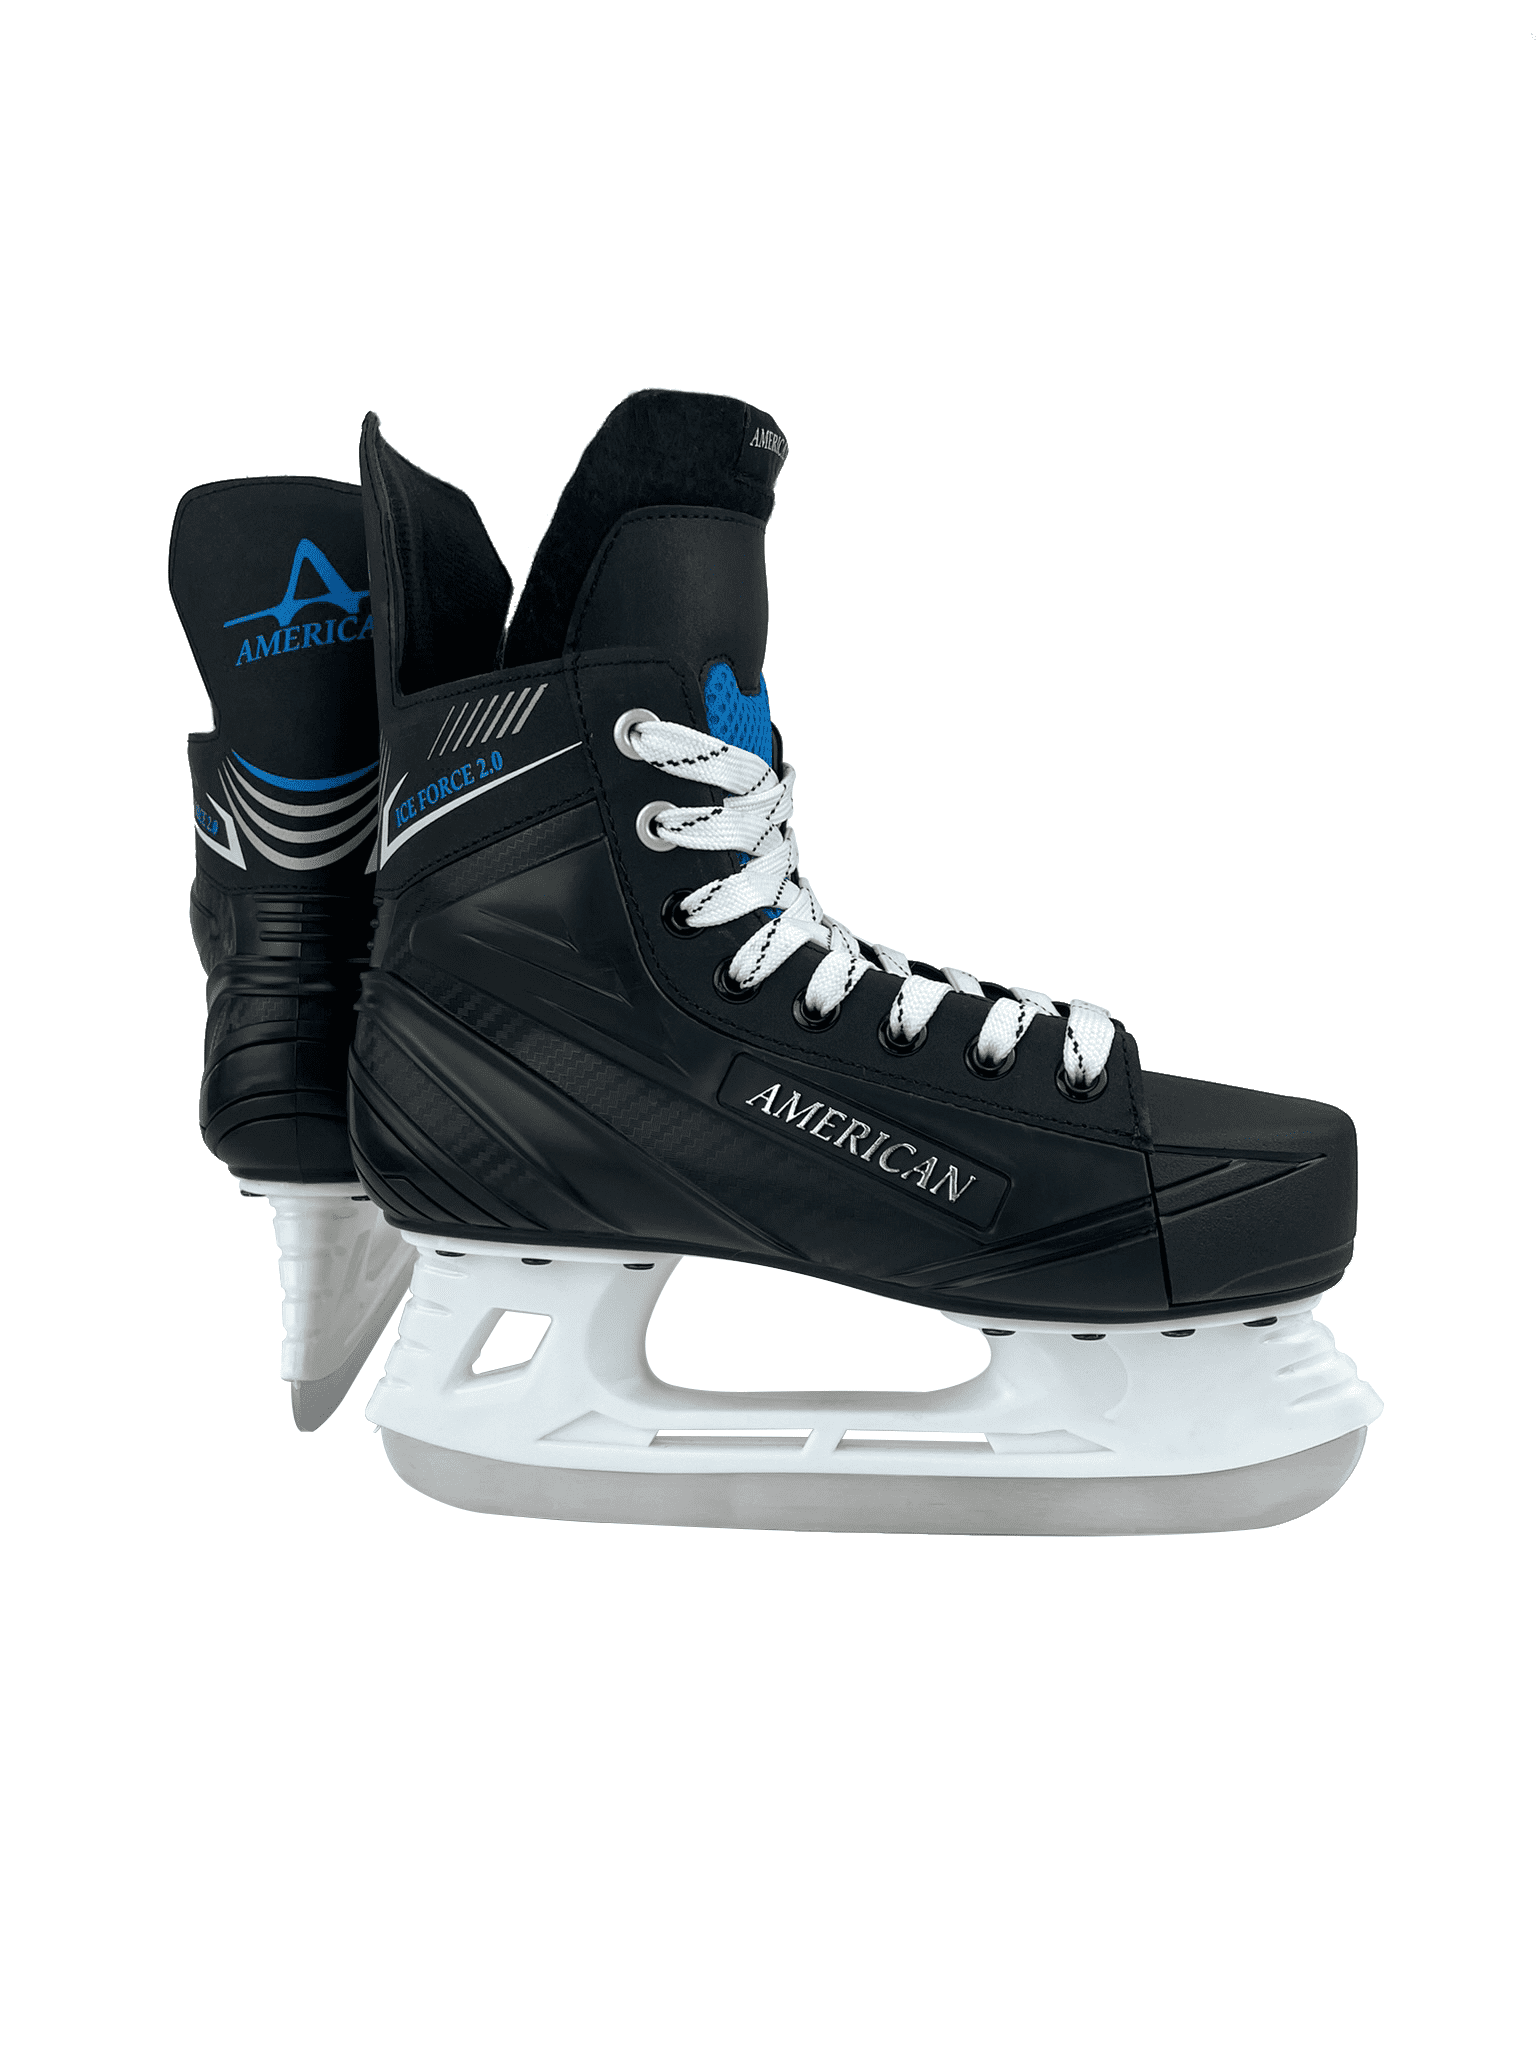 Bauer Hockey Skates